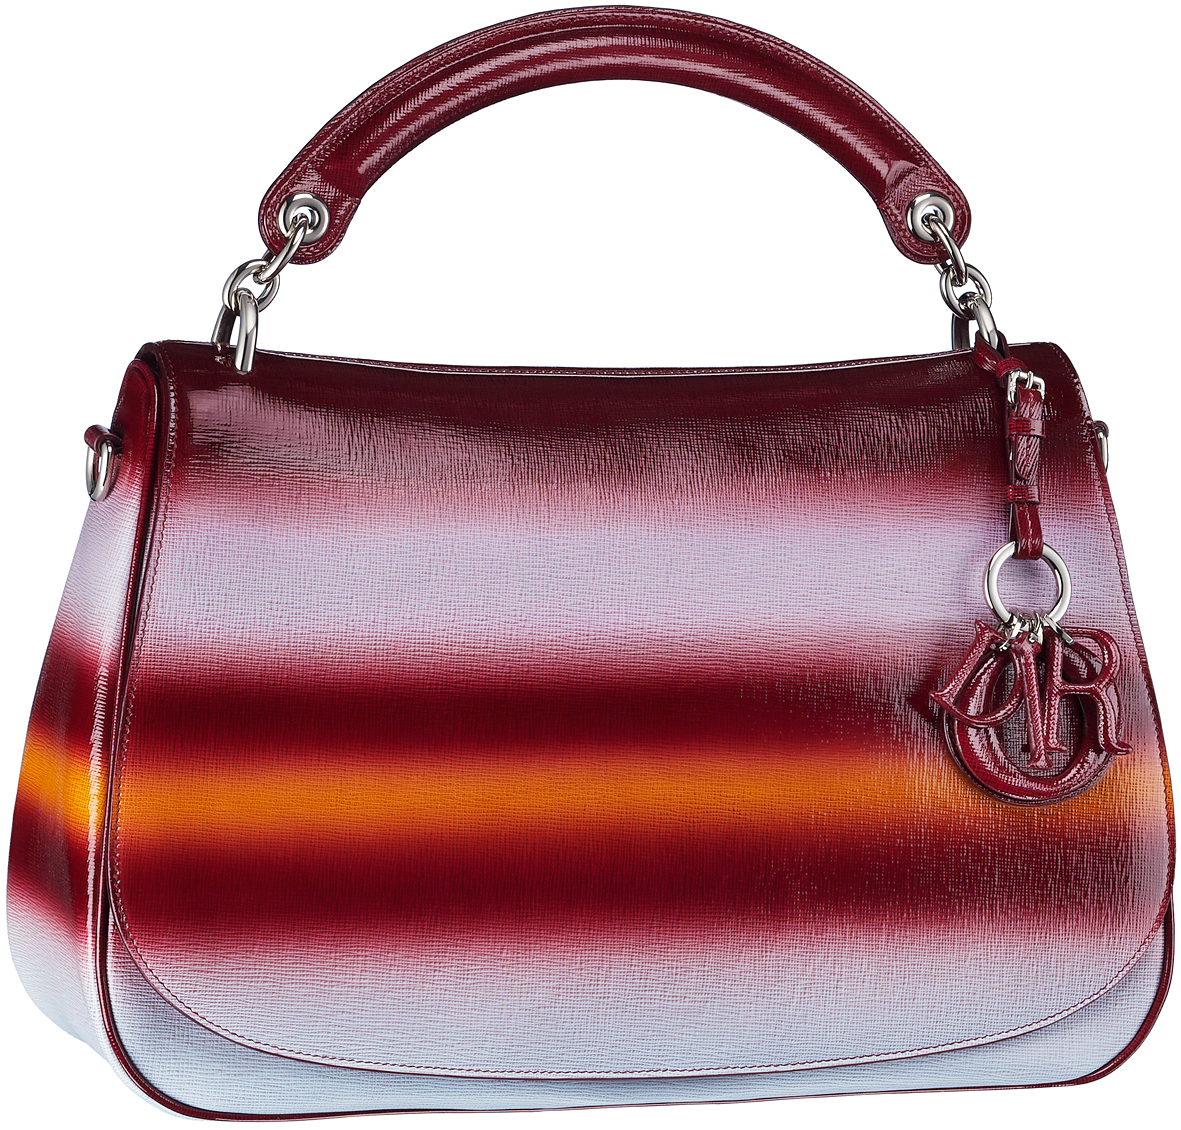 Dior Introduces the Dune Handbag for FW15